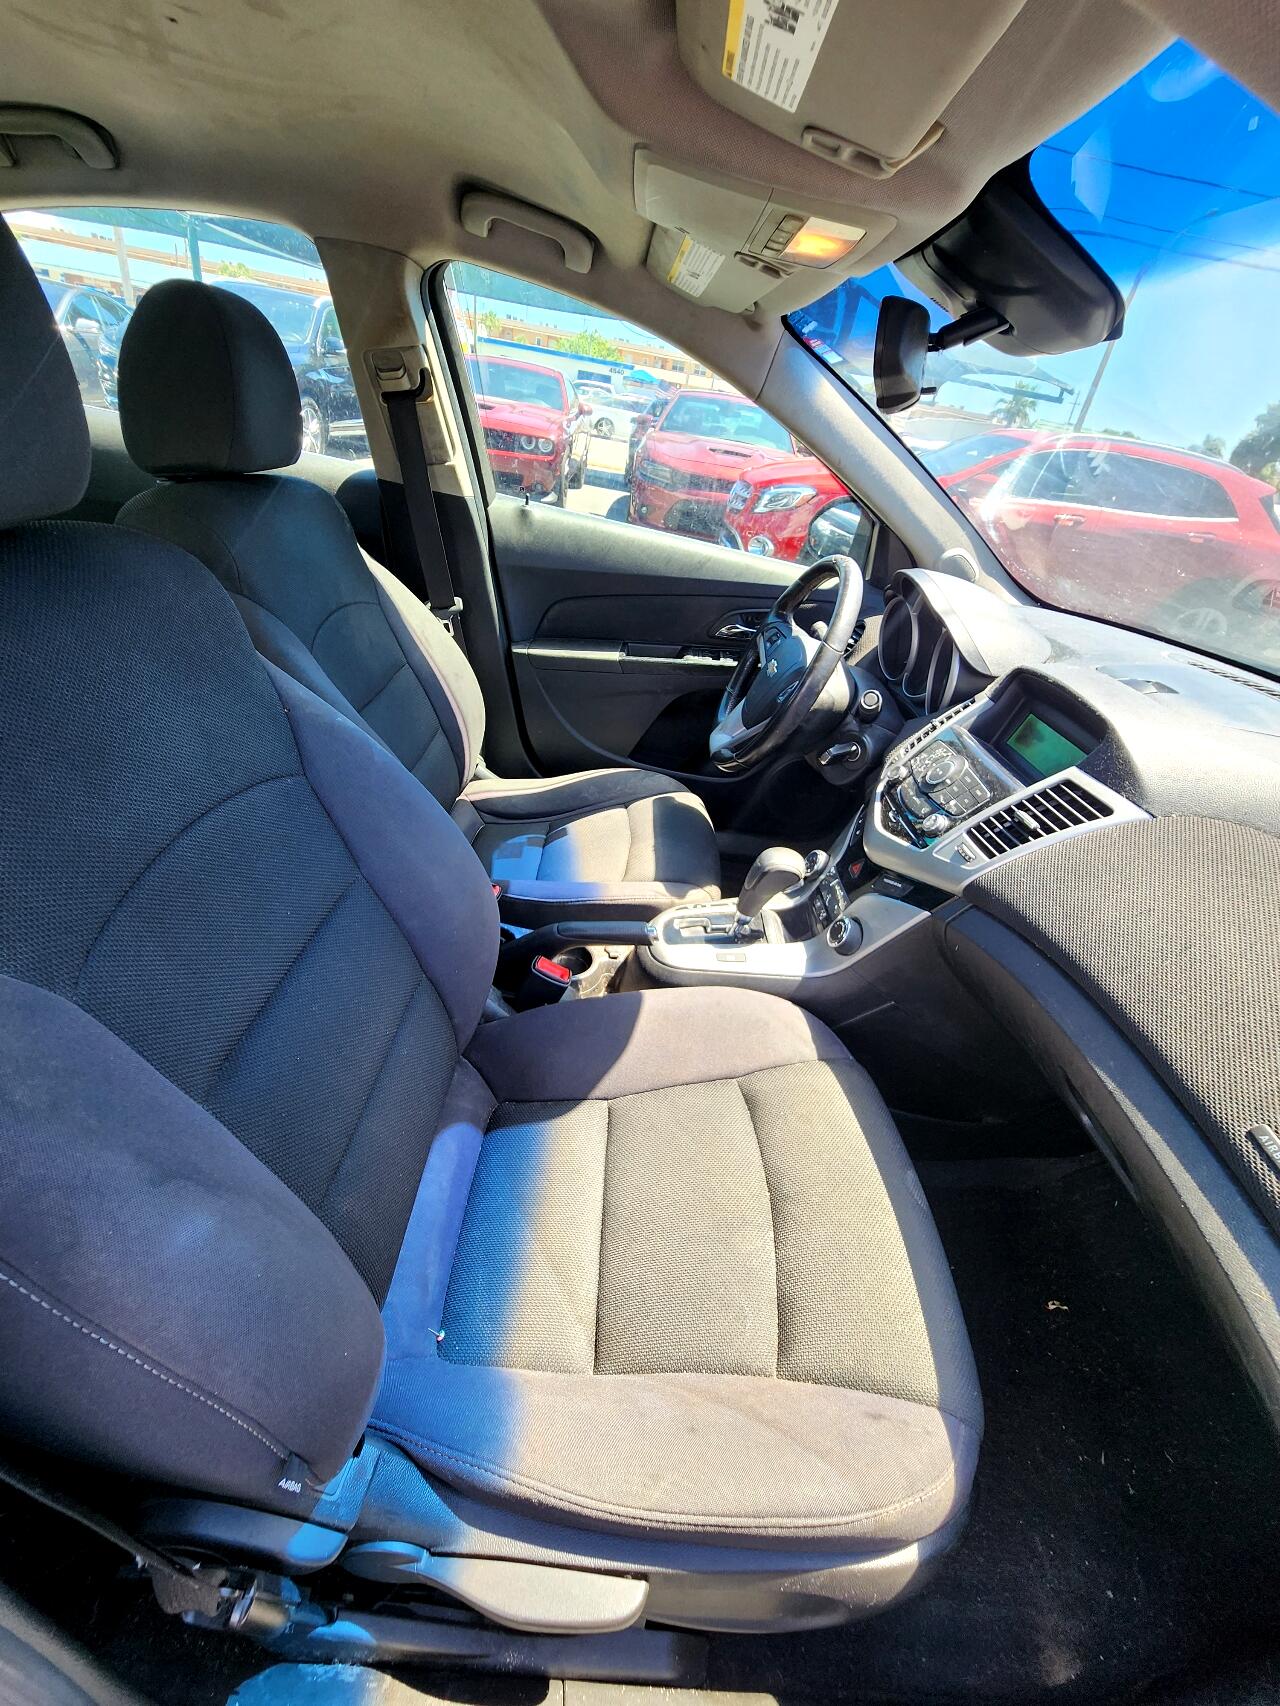 2014 CHEVROLET Cruze Sedan - $3,499